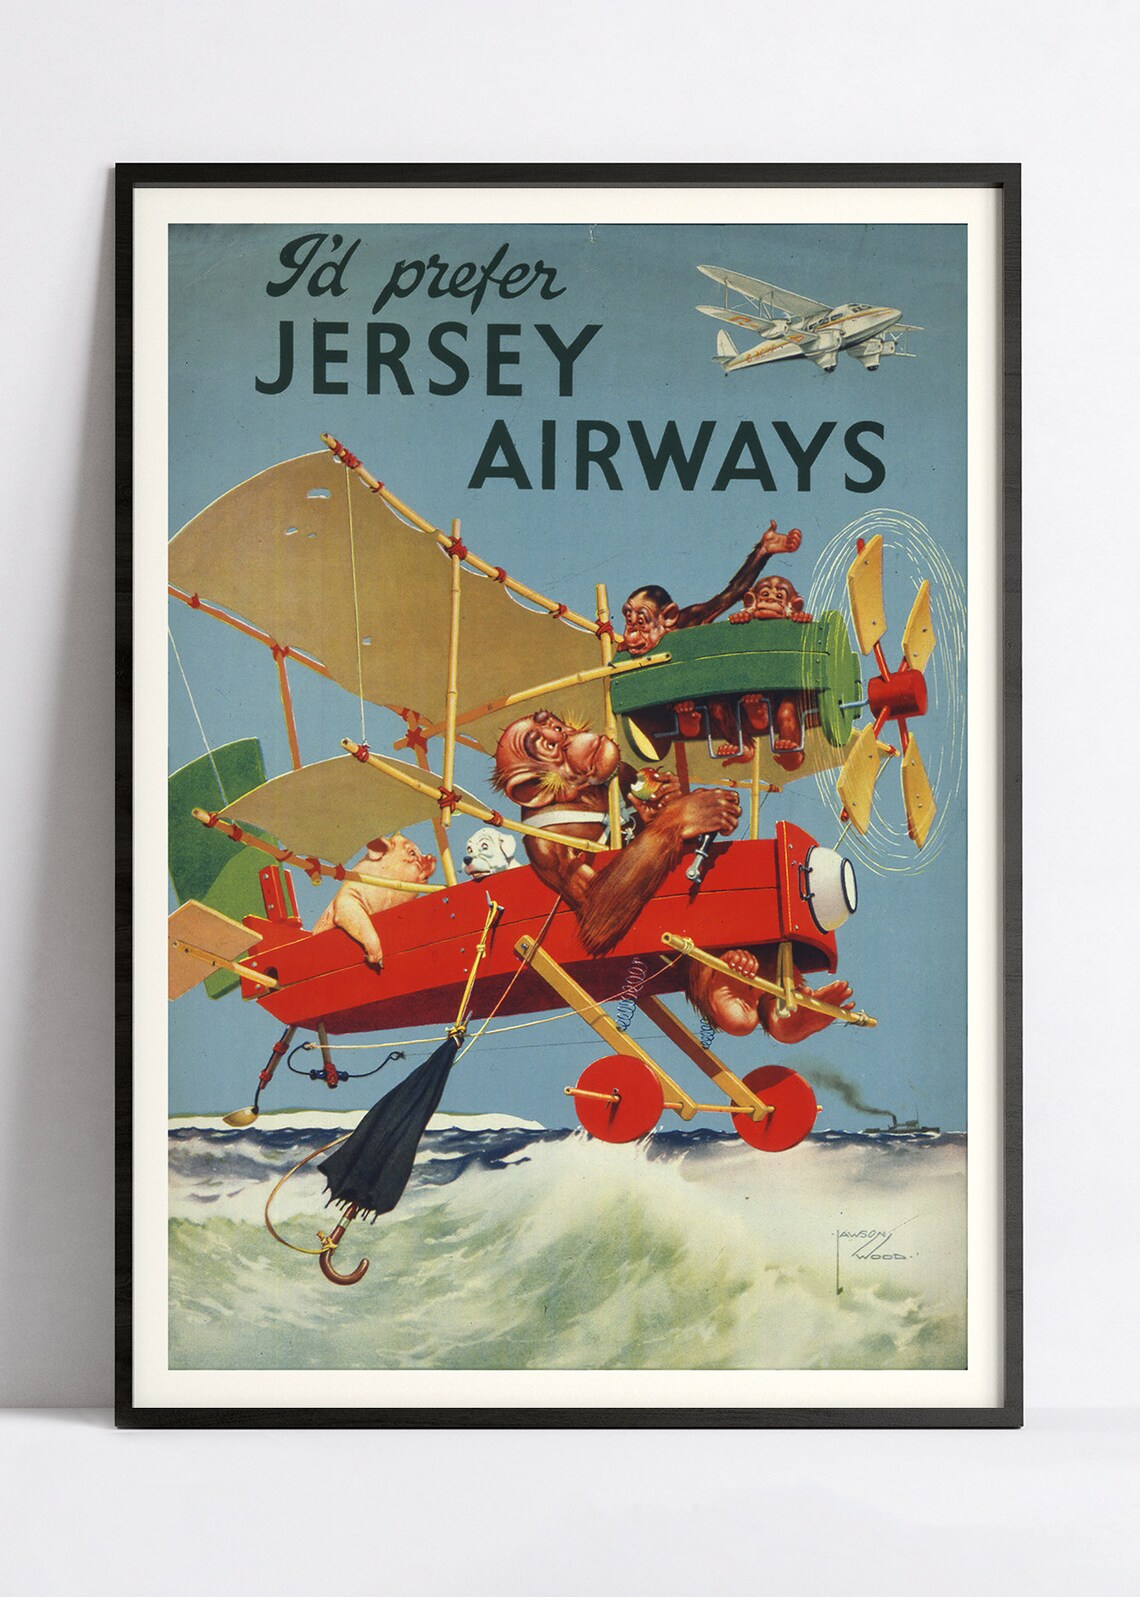 Affiche aviation vintage "Flying Monkeys" - Jersey Airways  - Haute Définition - papier mat 230gr/m2